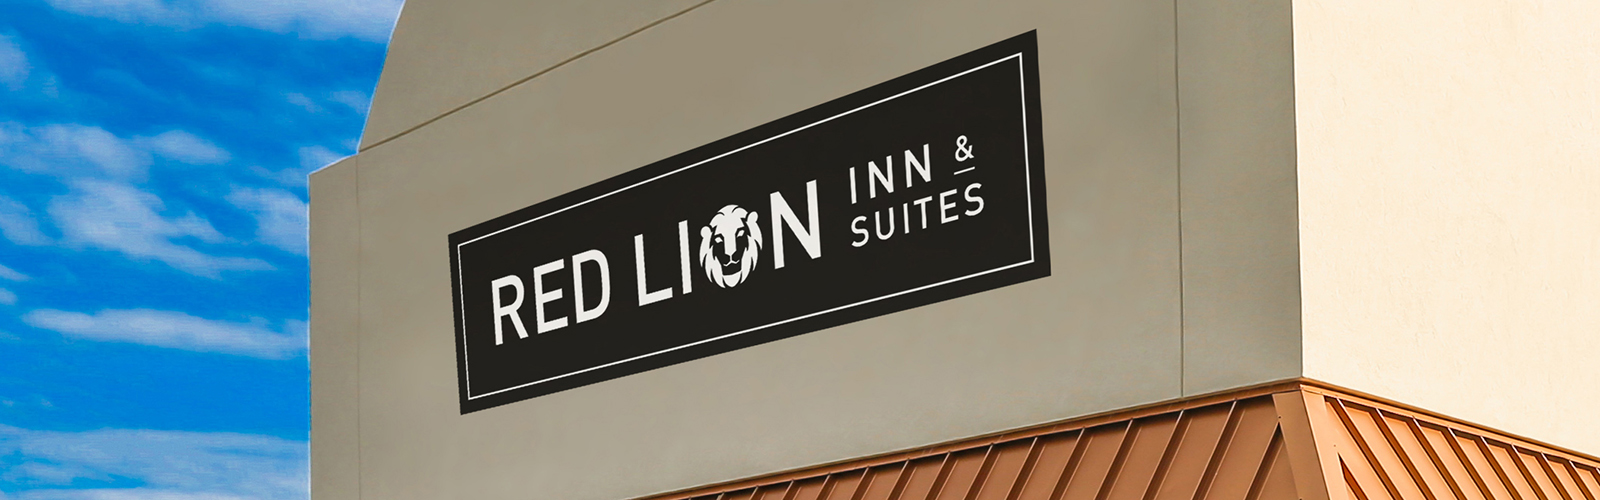 Red Lion Inn & Suites Exterior banner